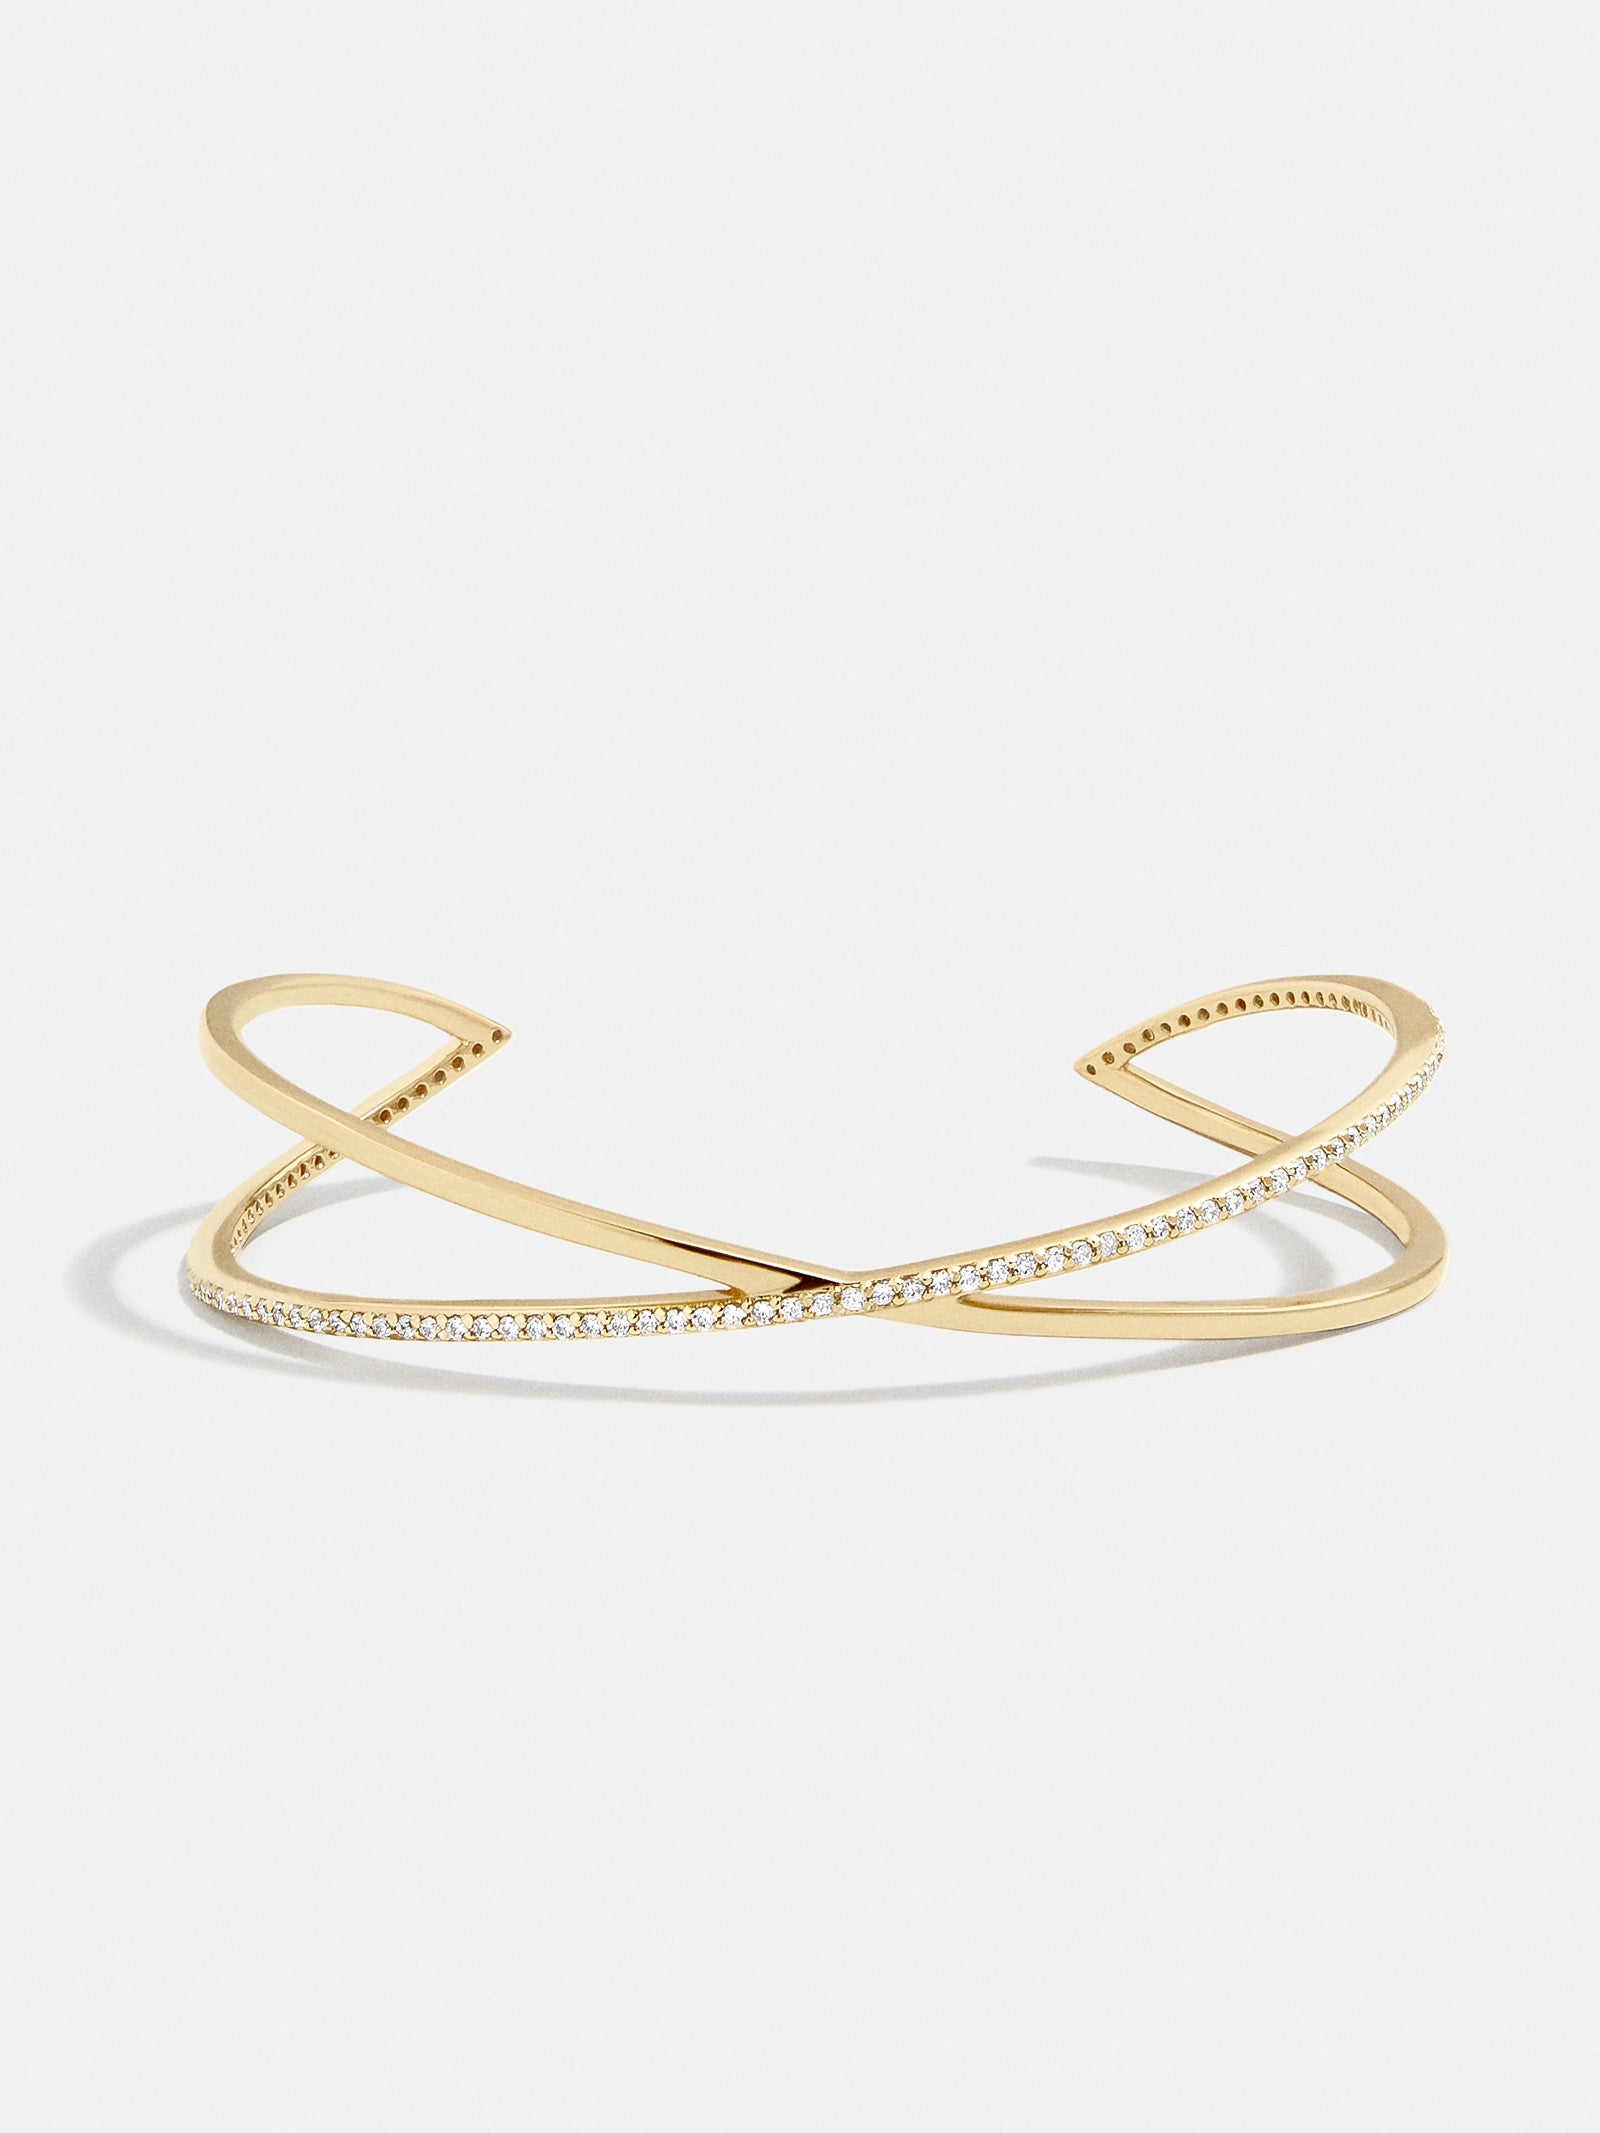 Shayla 18K Gold Cuff Bracelet - Gold – 18K Gold Plated Sterling Silver ...